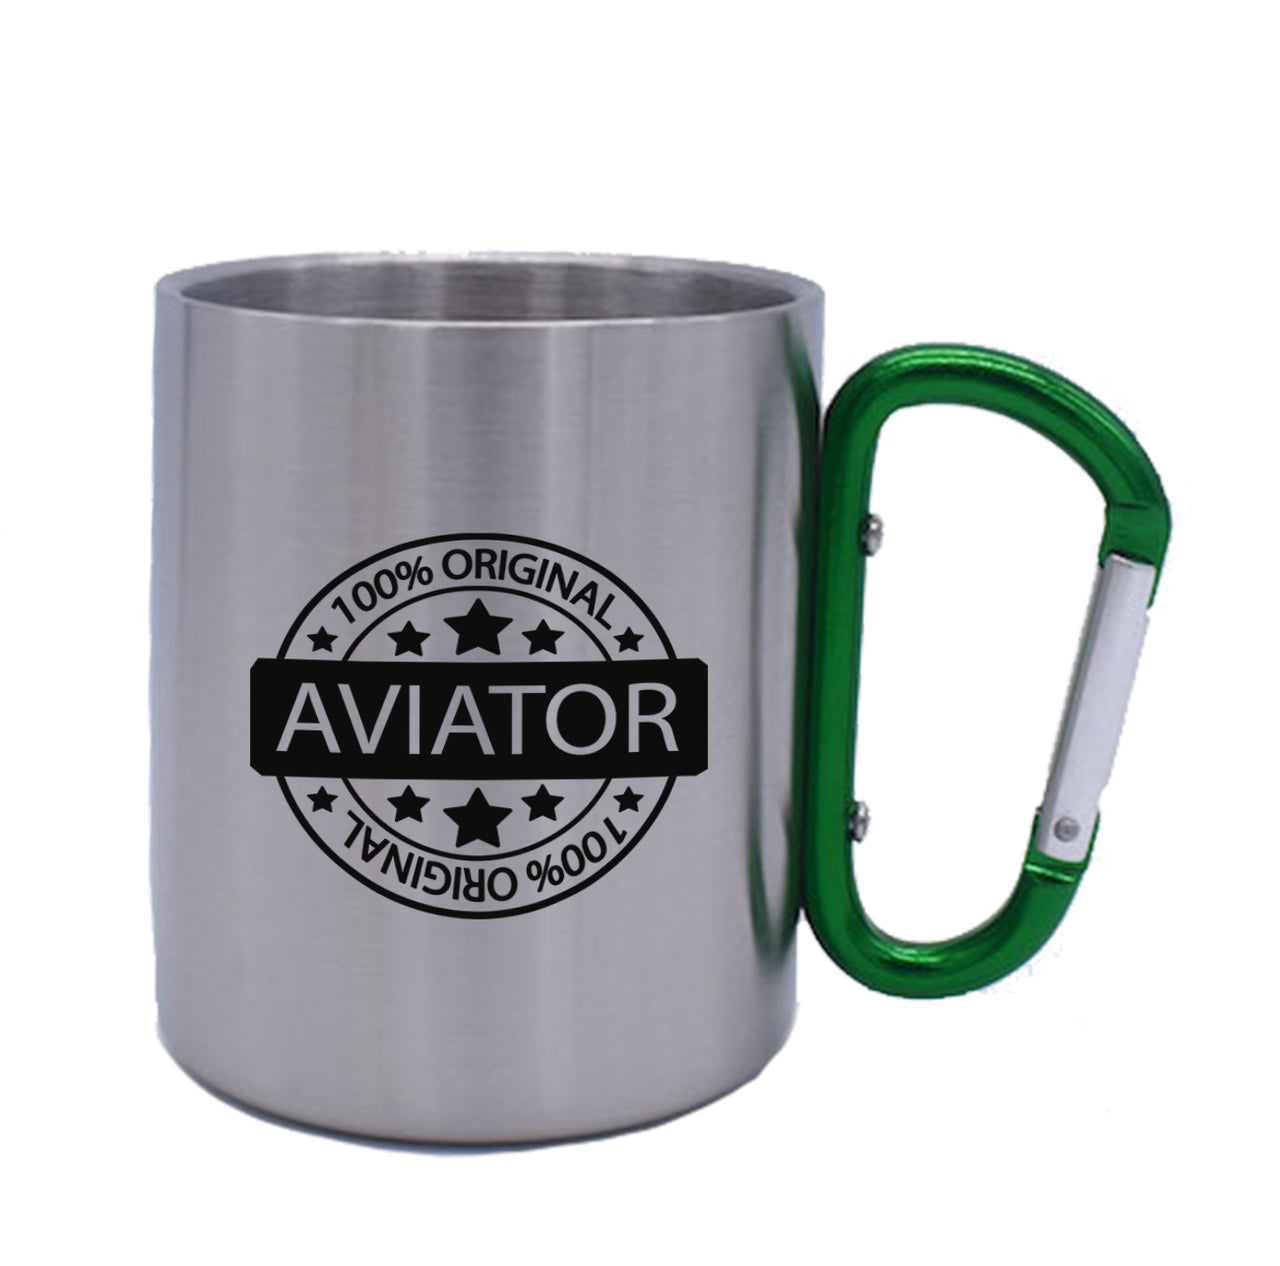 %100 Original Aviator Designed Stainless Steel Outdoors Mugs